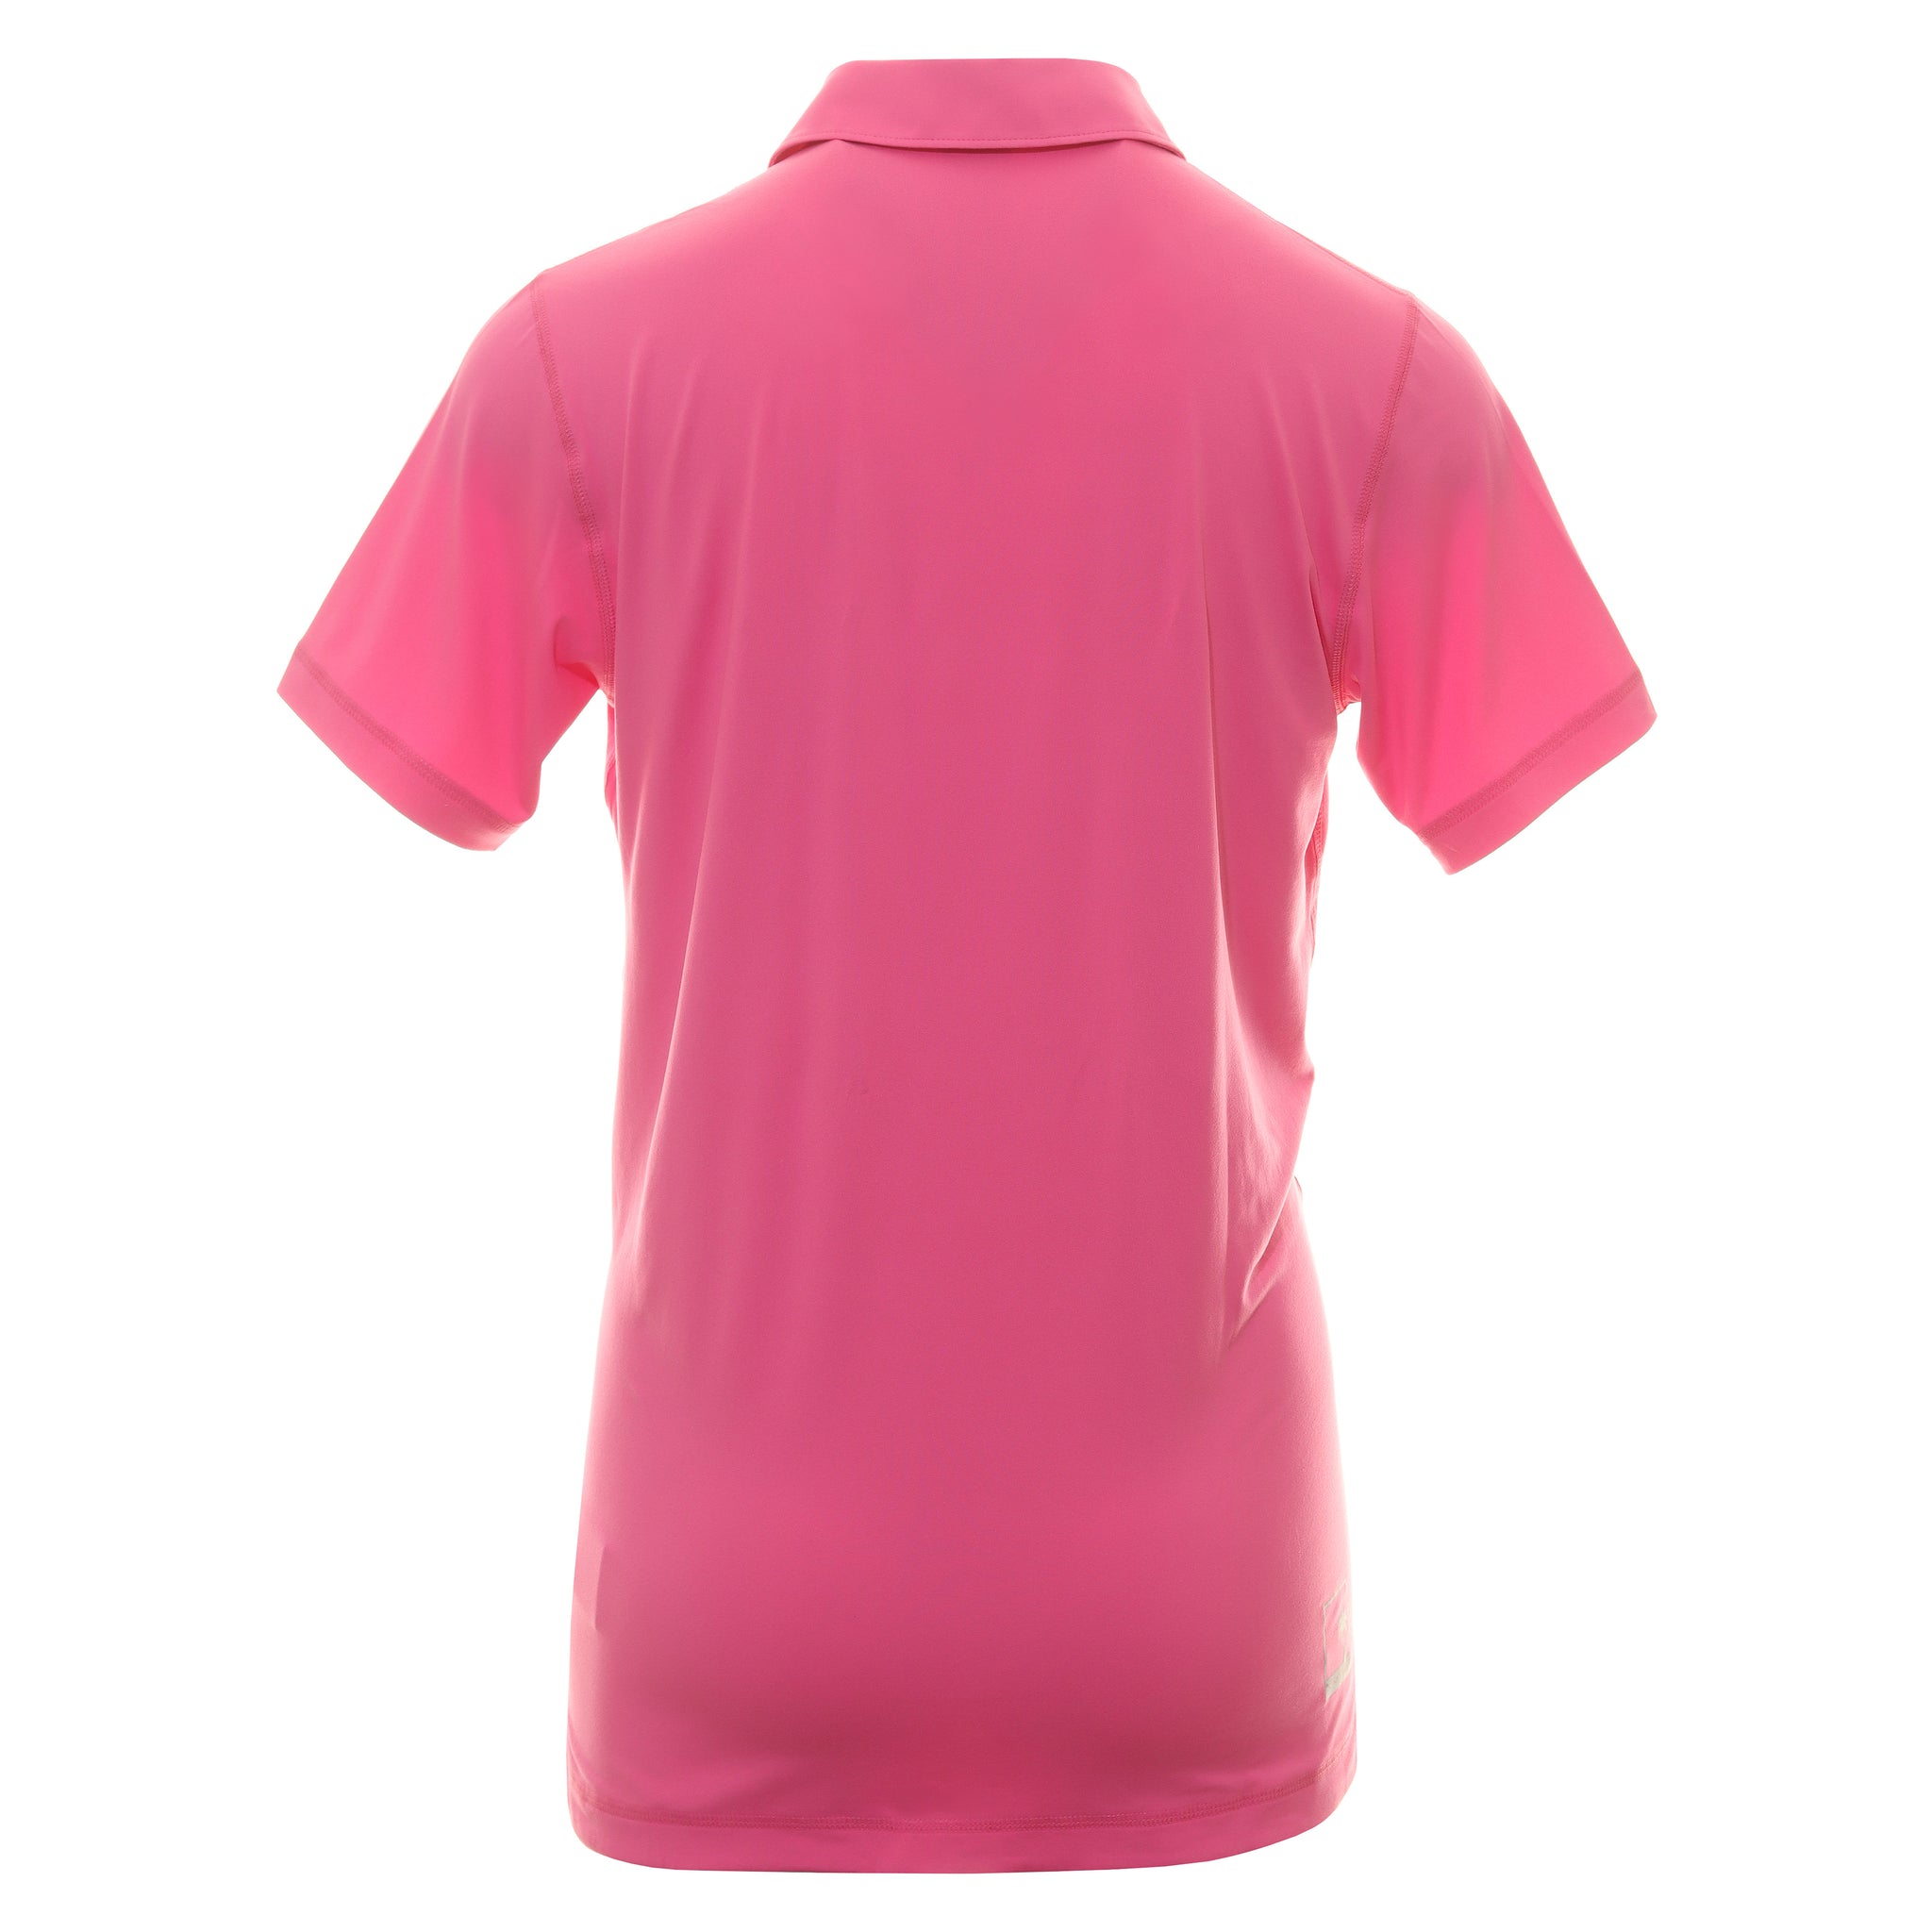 puma-golf-x-ptc-shirt-539201-charming-pink-04